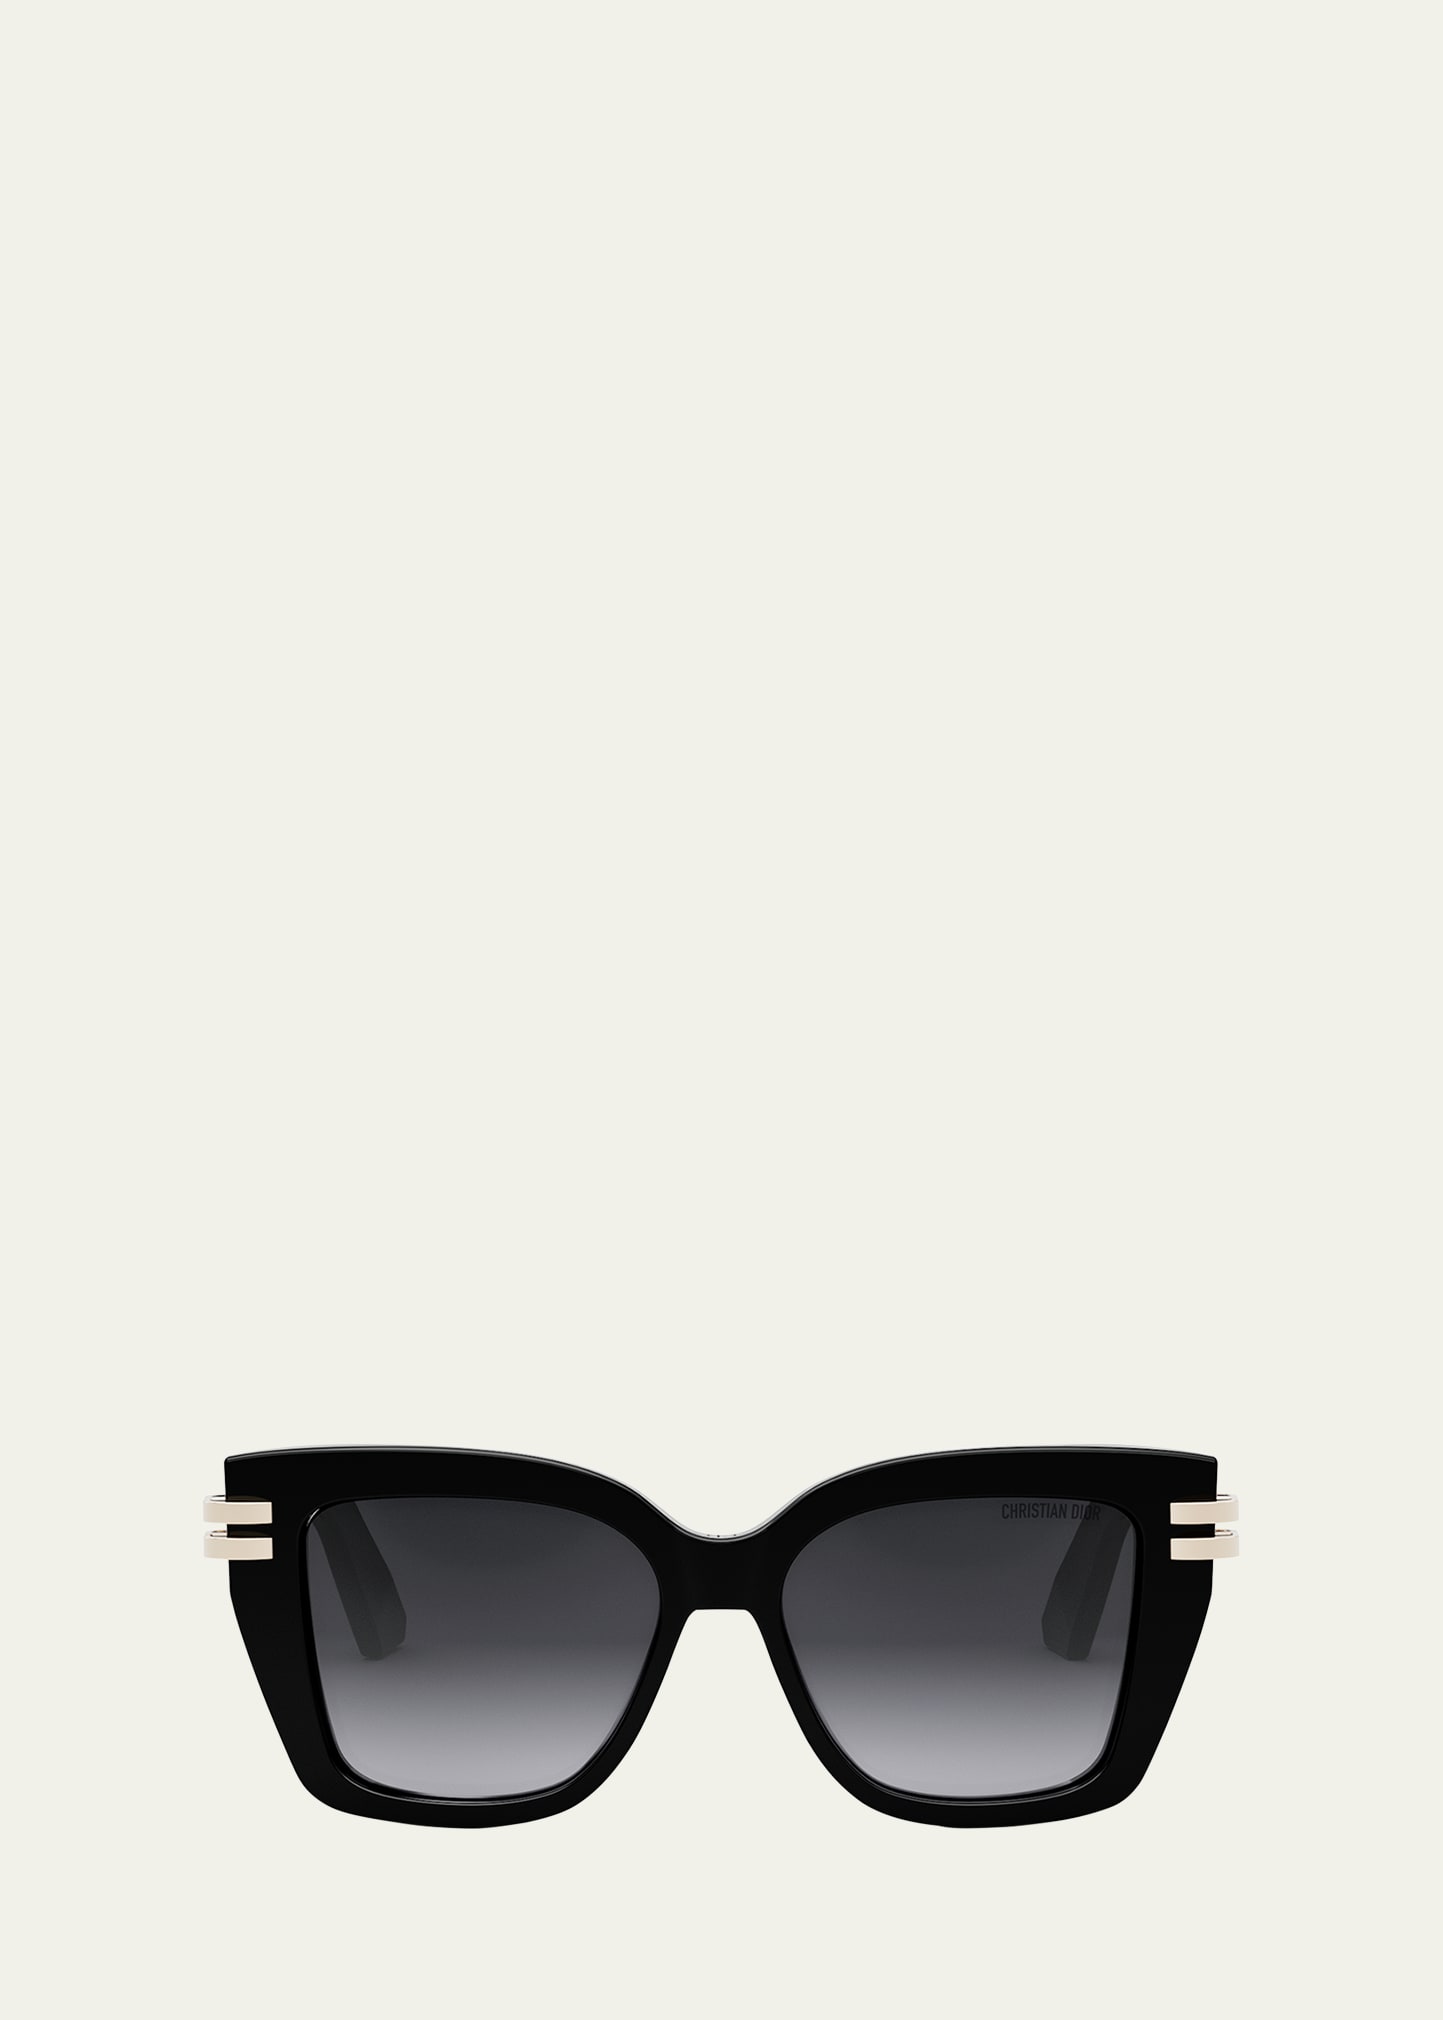 Shop Dior C S1i Sunglasses In Shiny Red Smoke